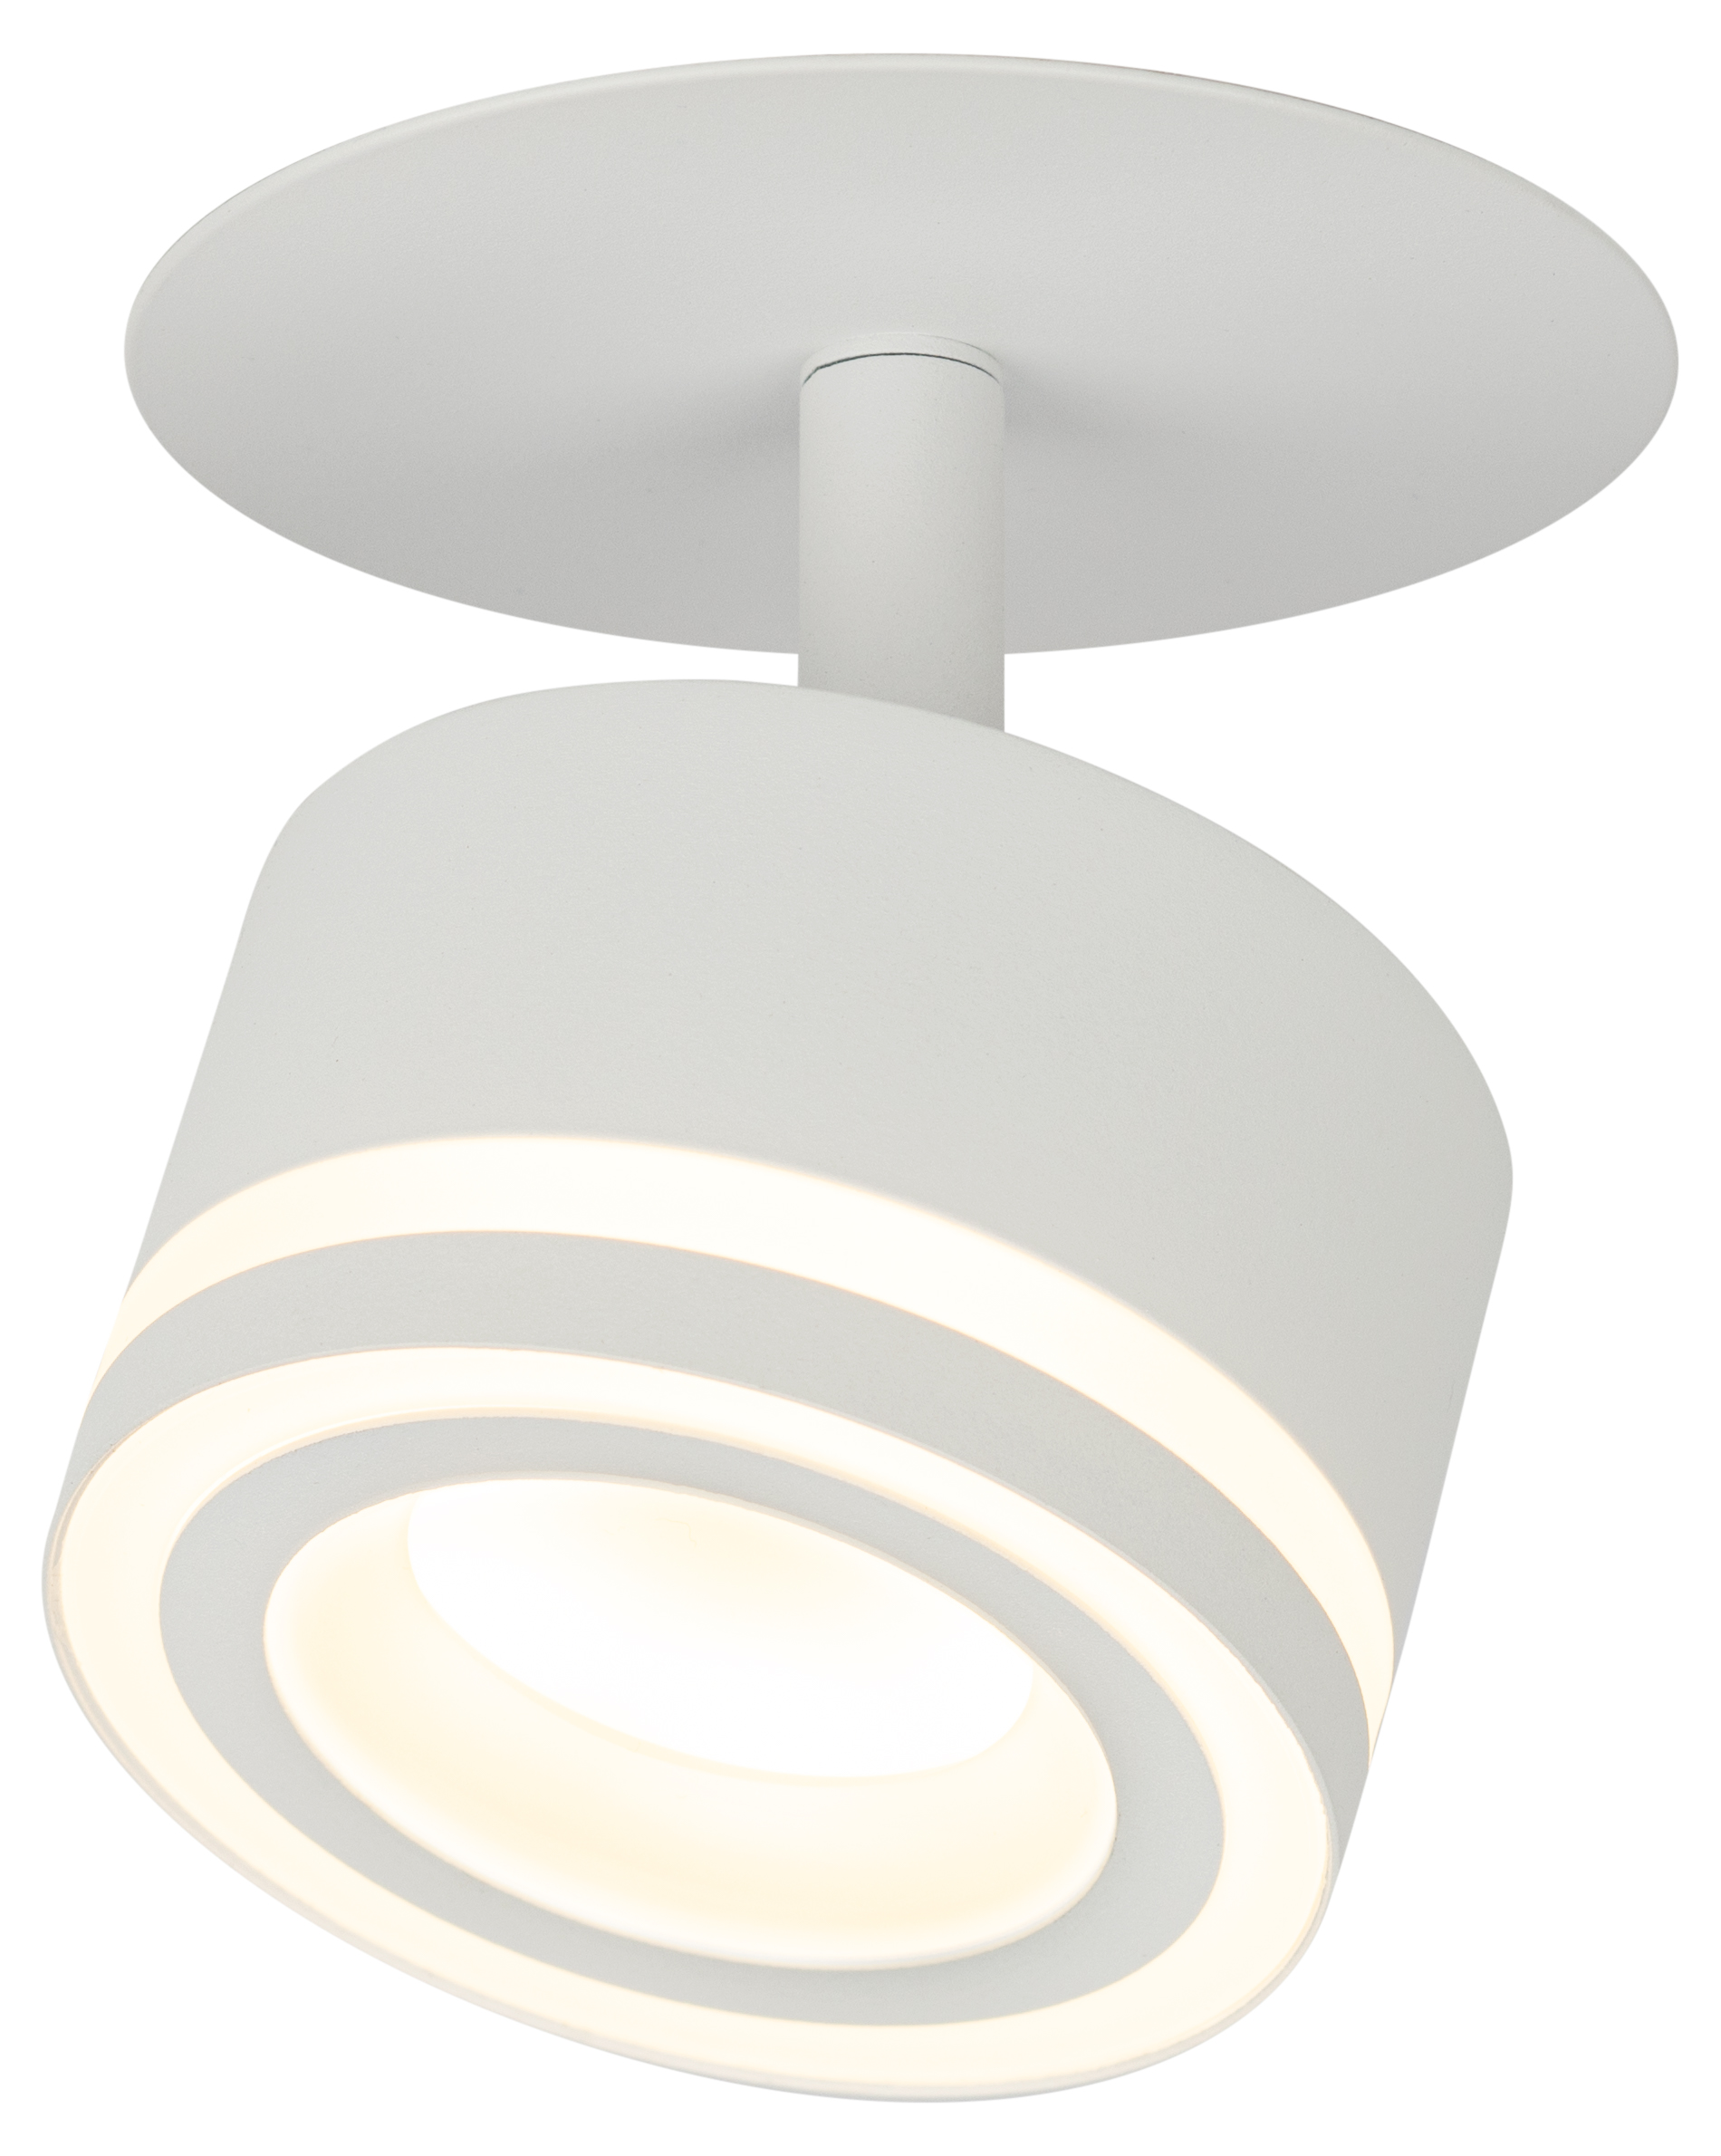 Встраиваемый светильник под лампу GX53 ЭРА DK114 WH белый